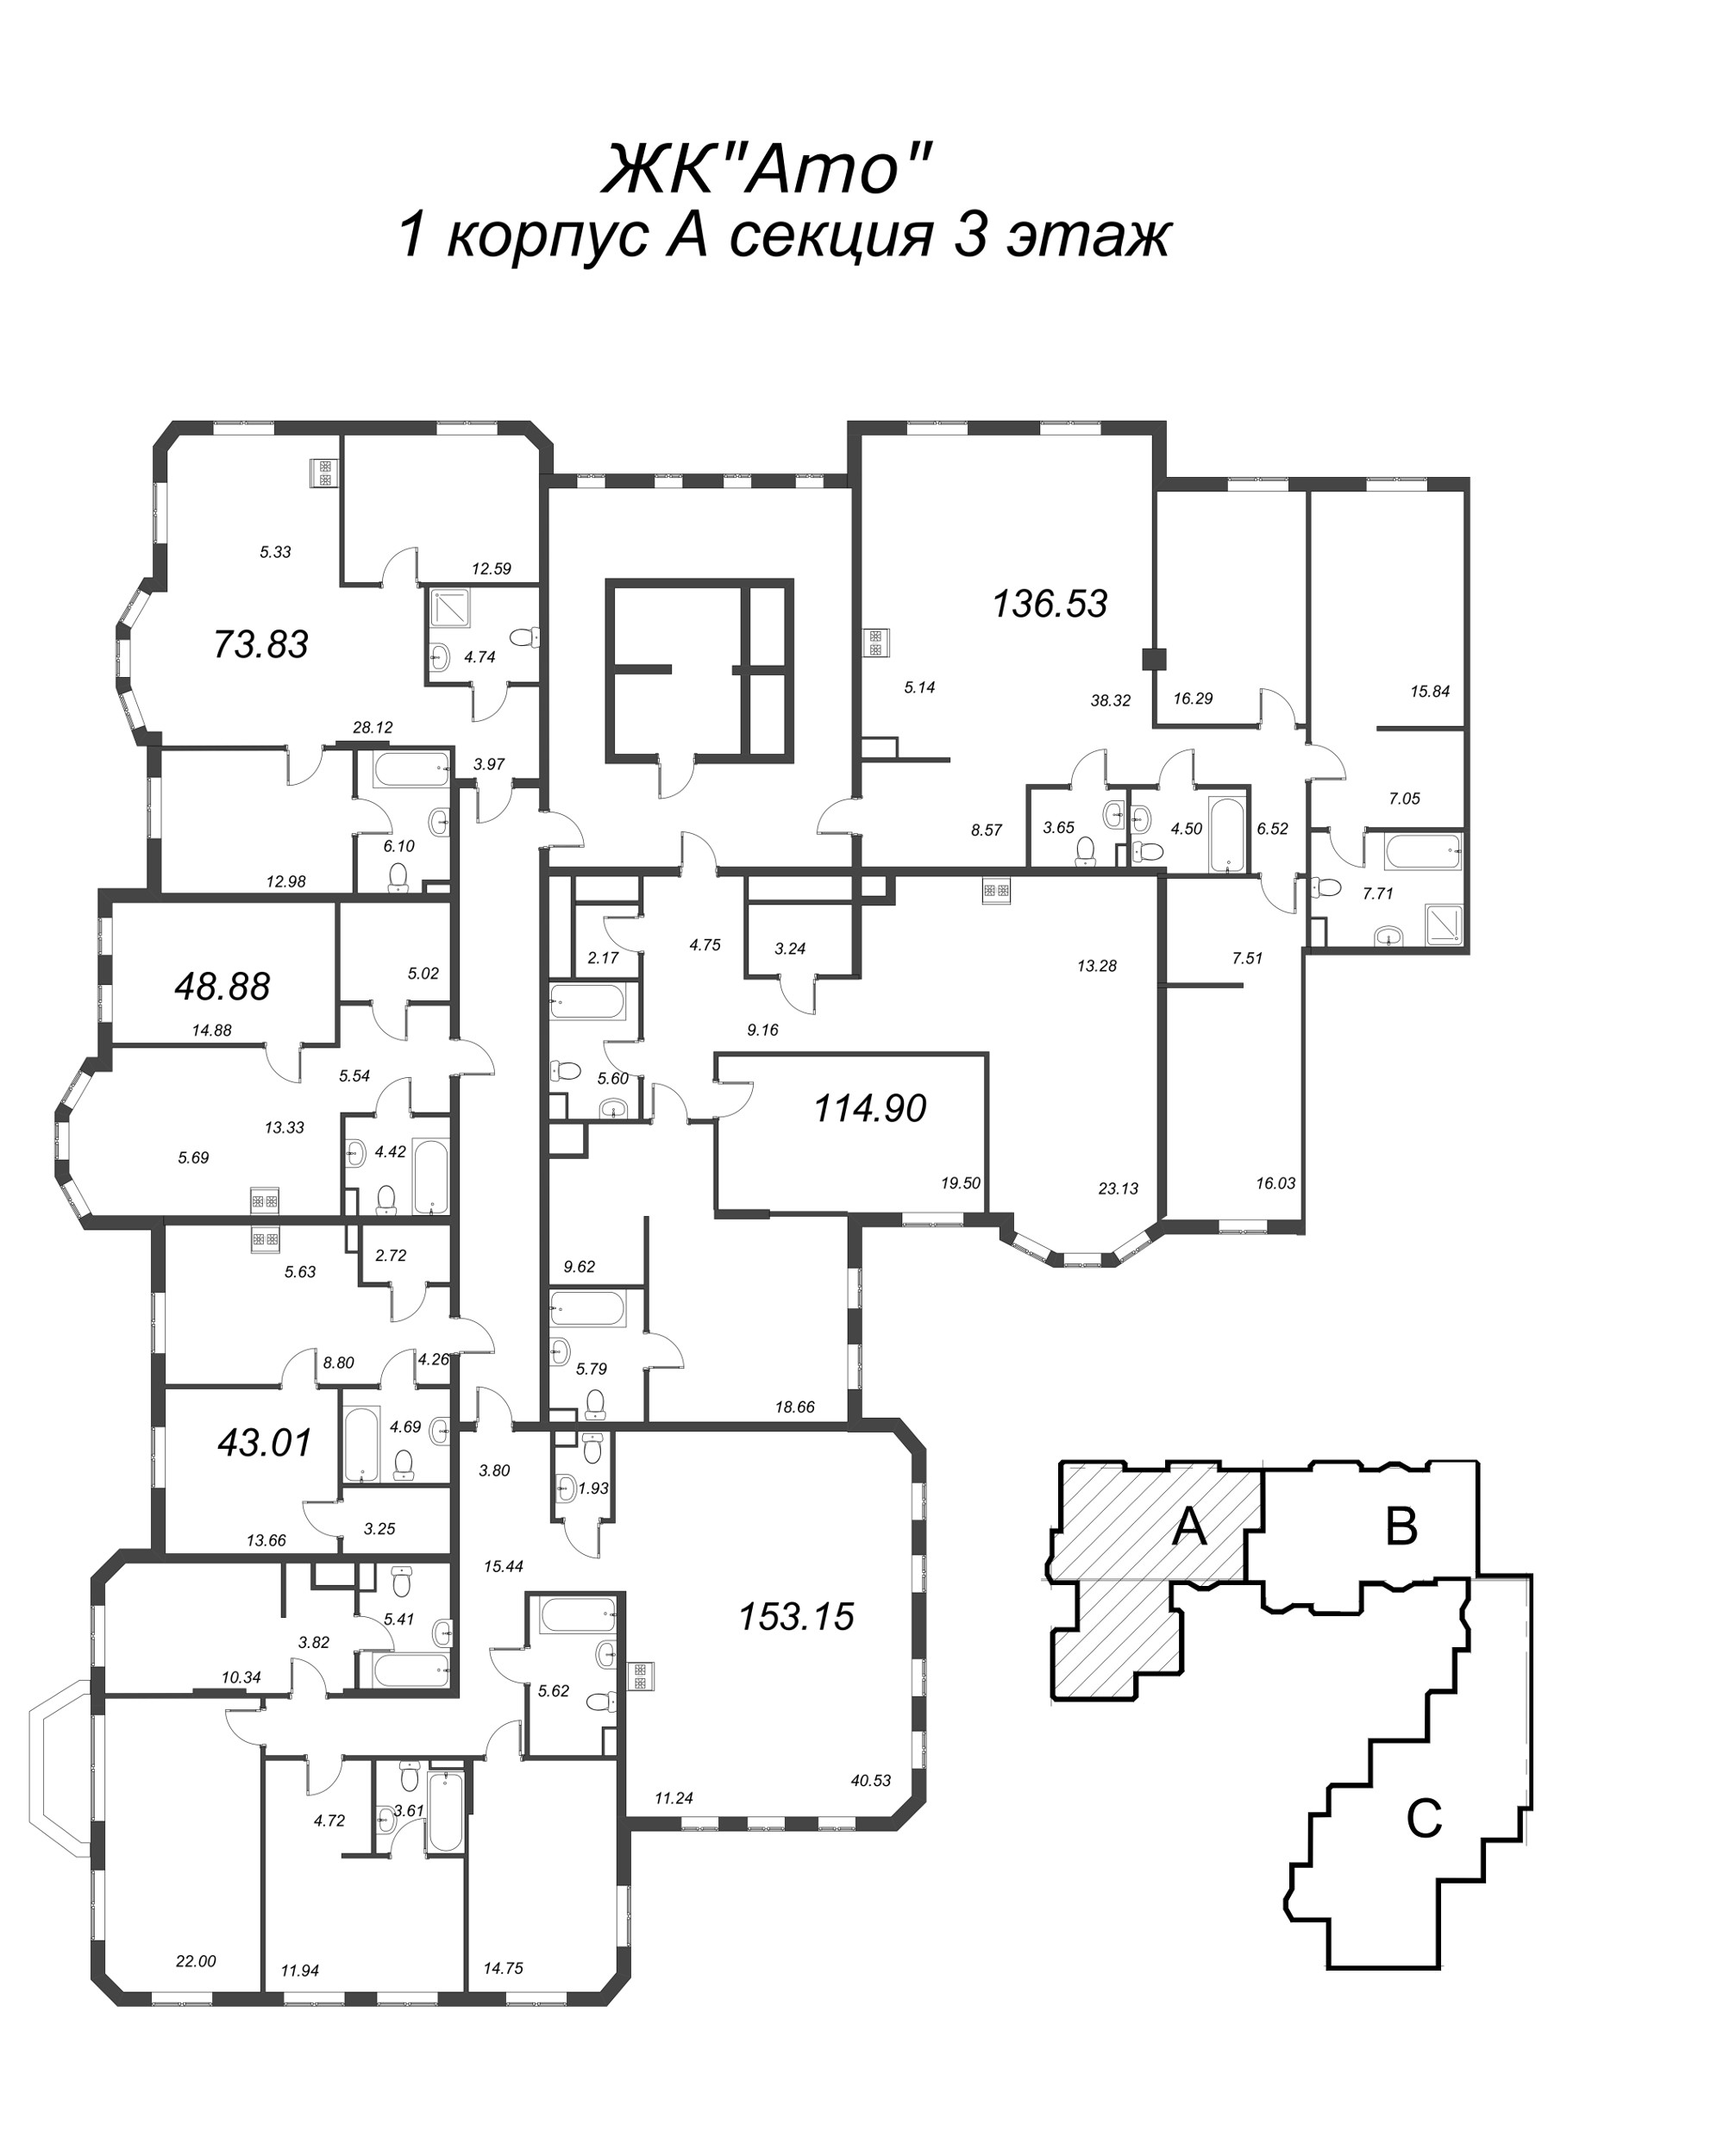 5-комнатная (Евро) квартира, 153.15 м² - планировка этажа